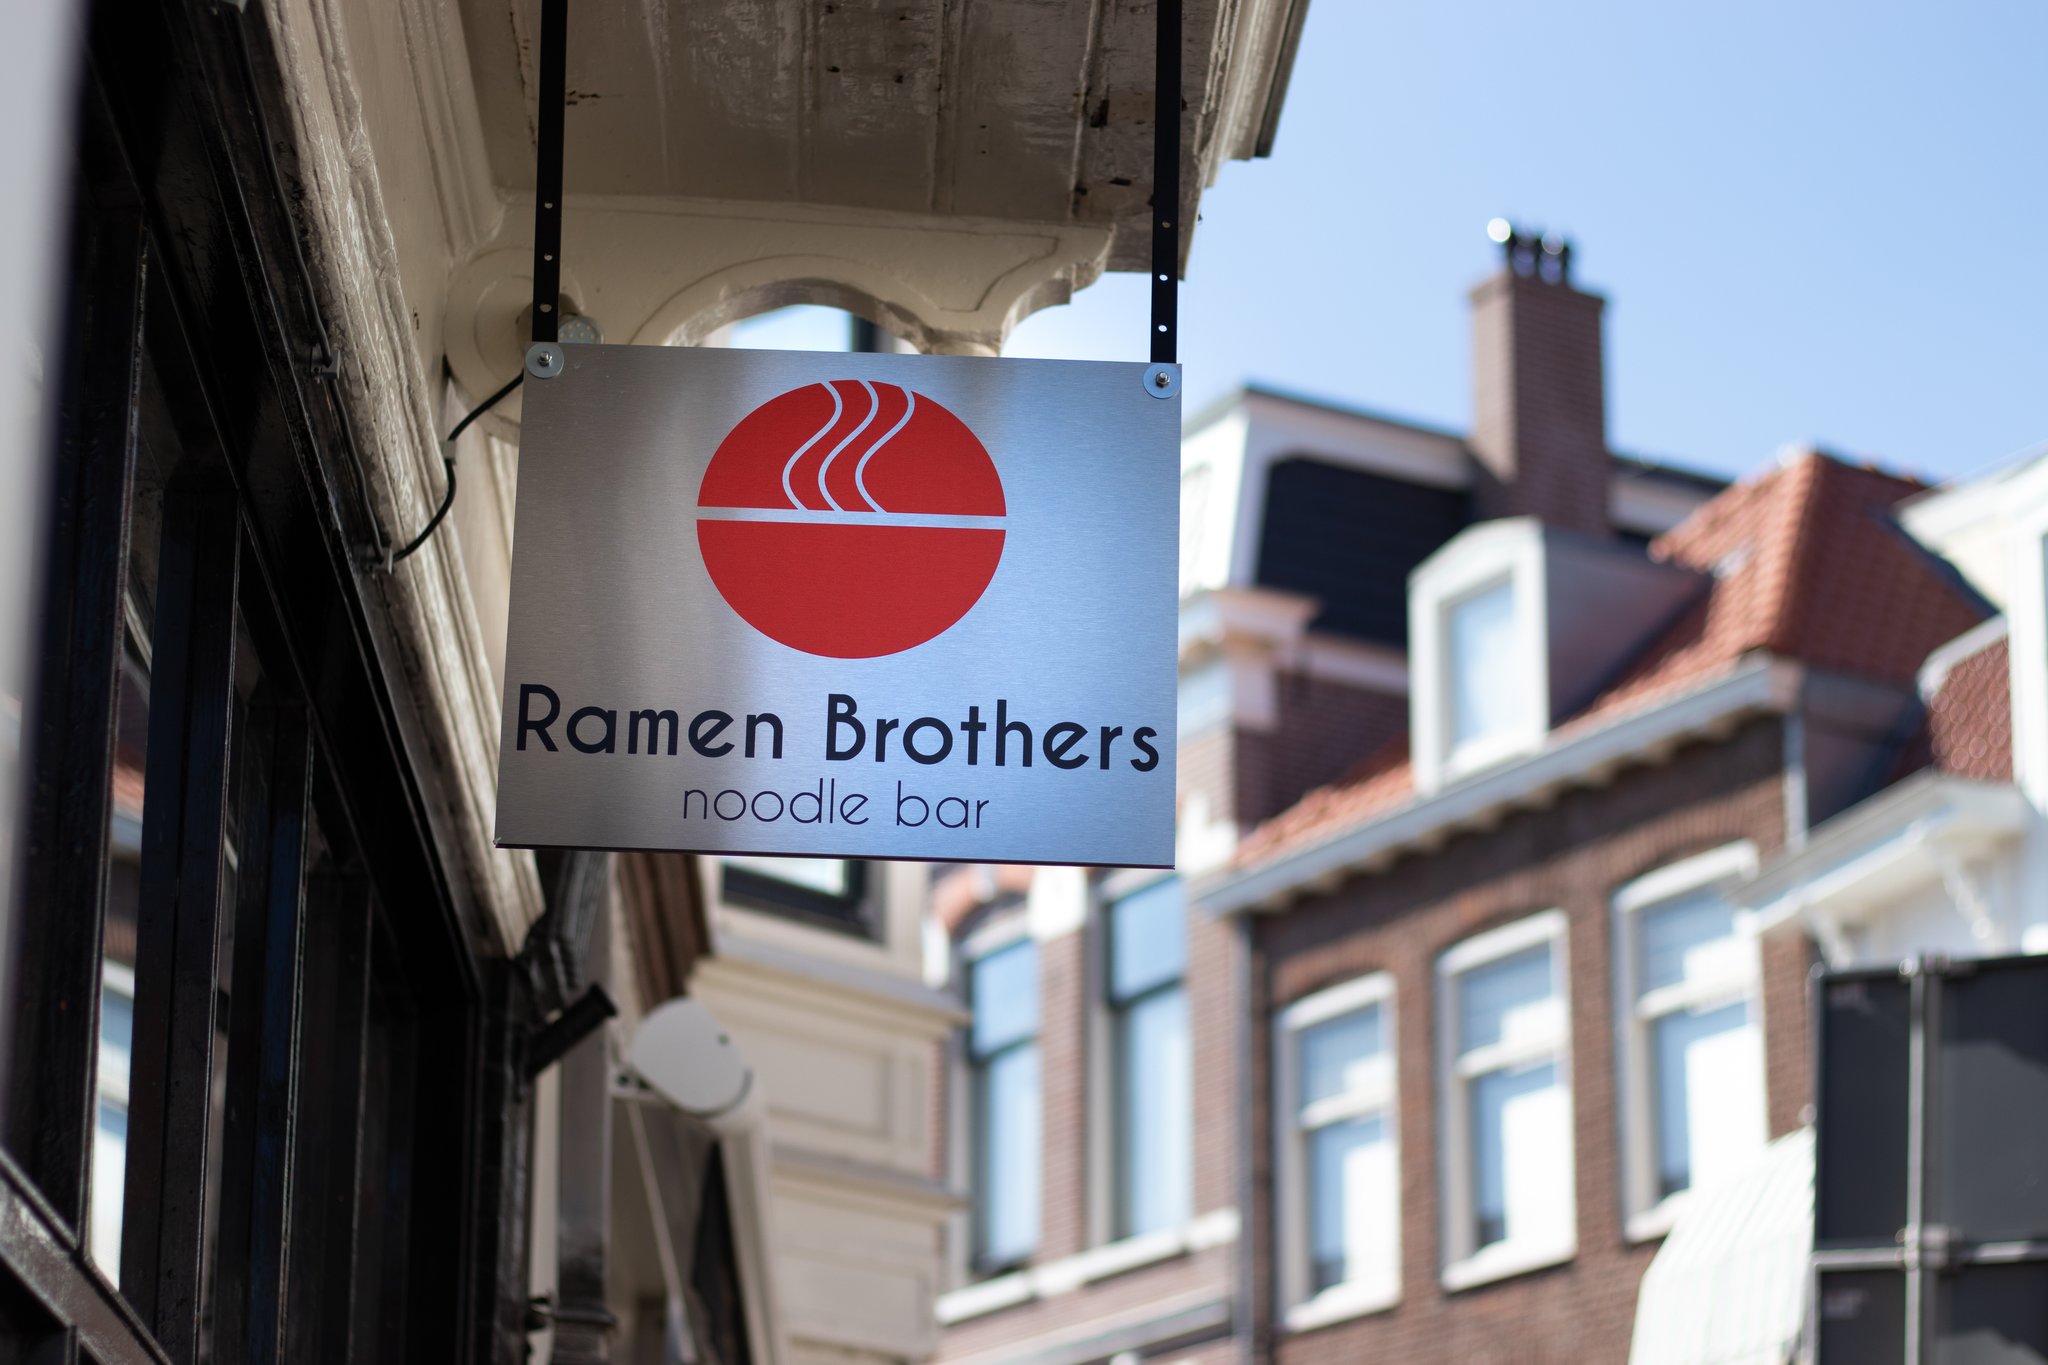 Ramen Brothers